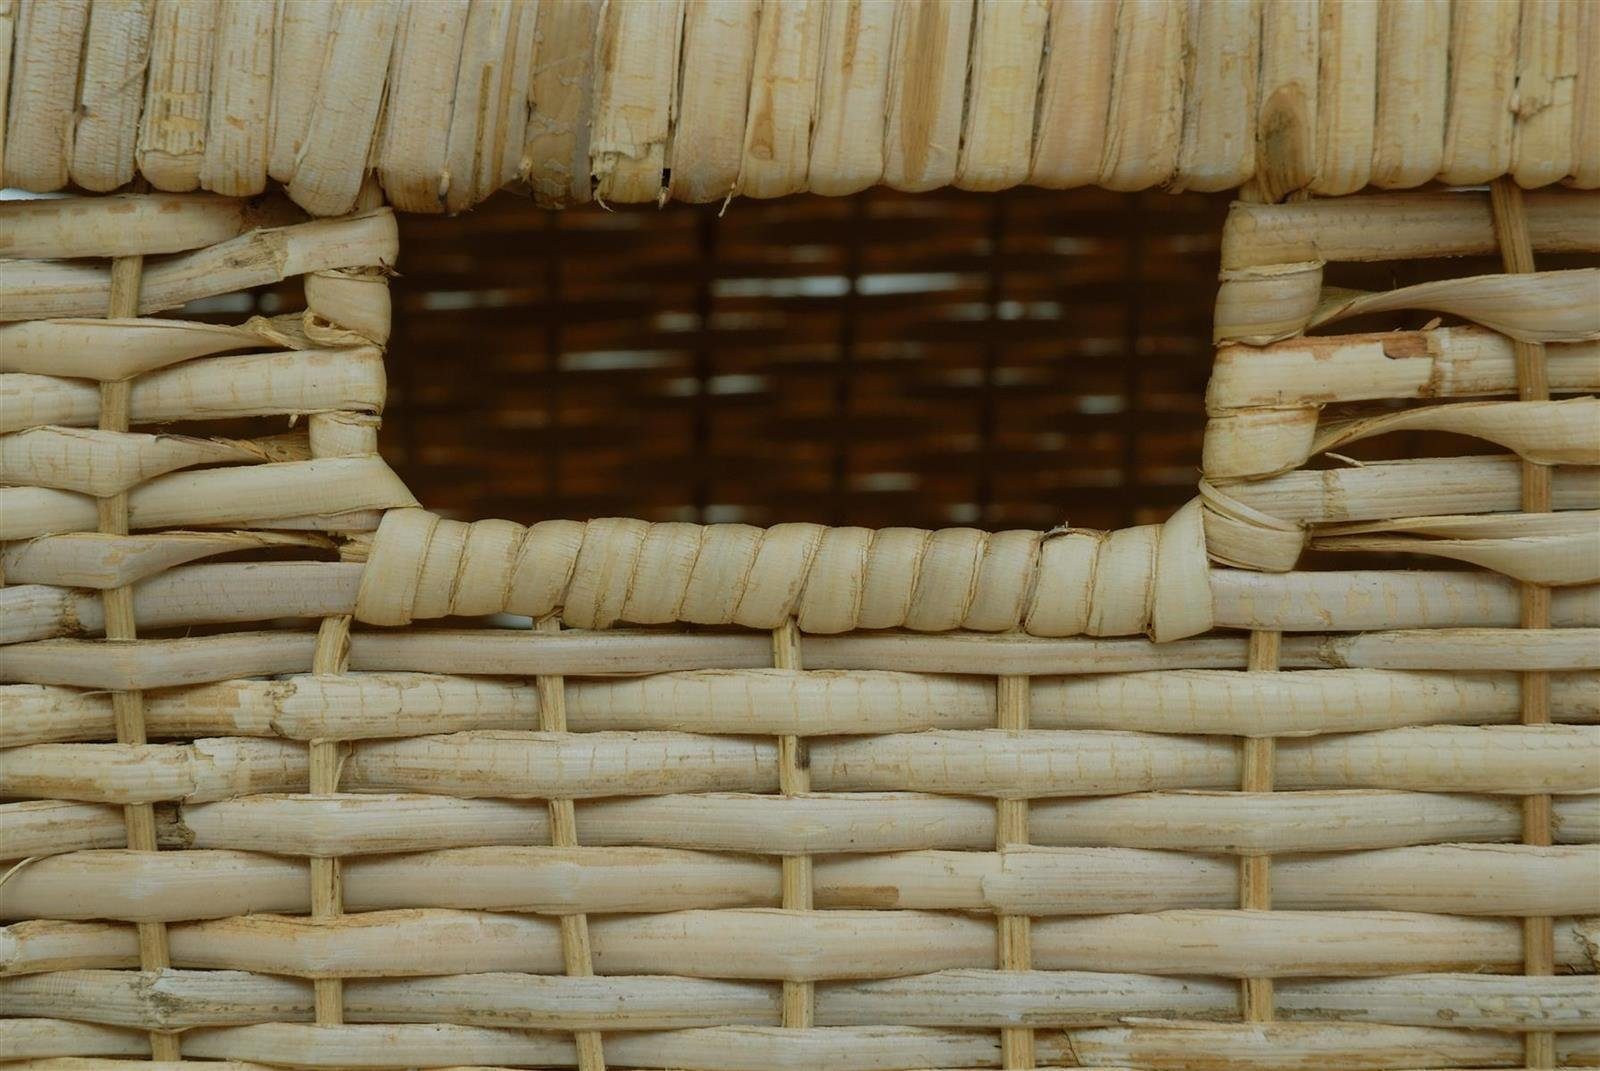 Krines Home Badregal Rattan Rattan Badregal Schubladen, Kommode Regal Standregal 4 Handgearbeitet Honig mit Korb